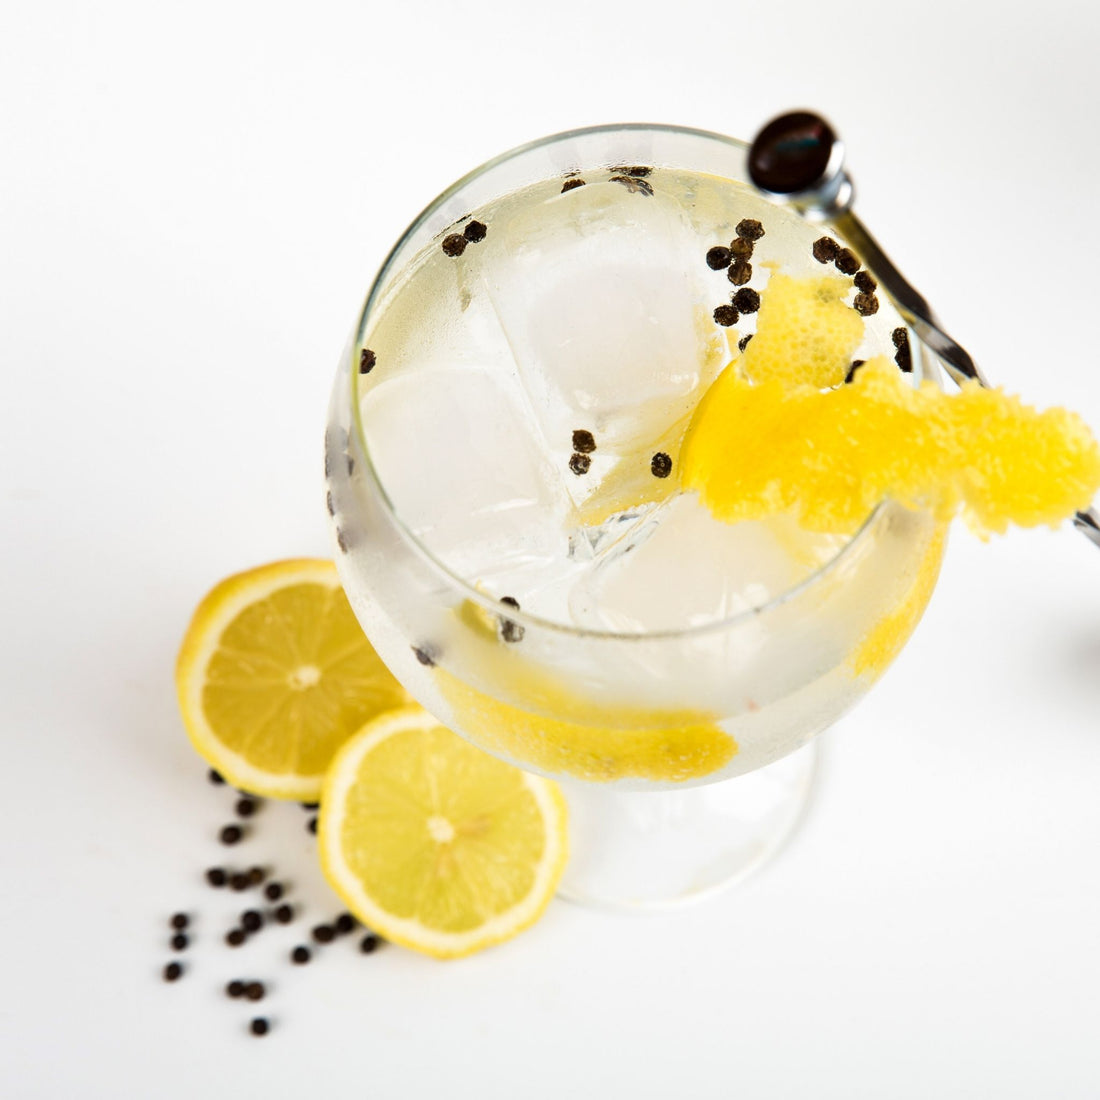 A photo of lemon and vodka mocktail recipe.